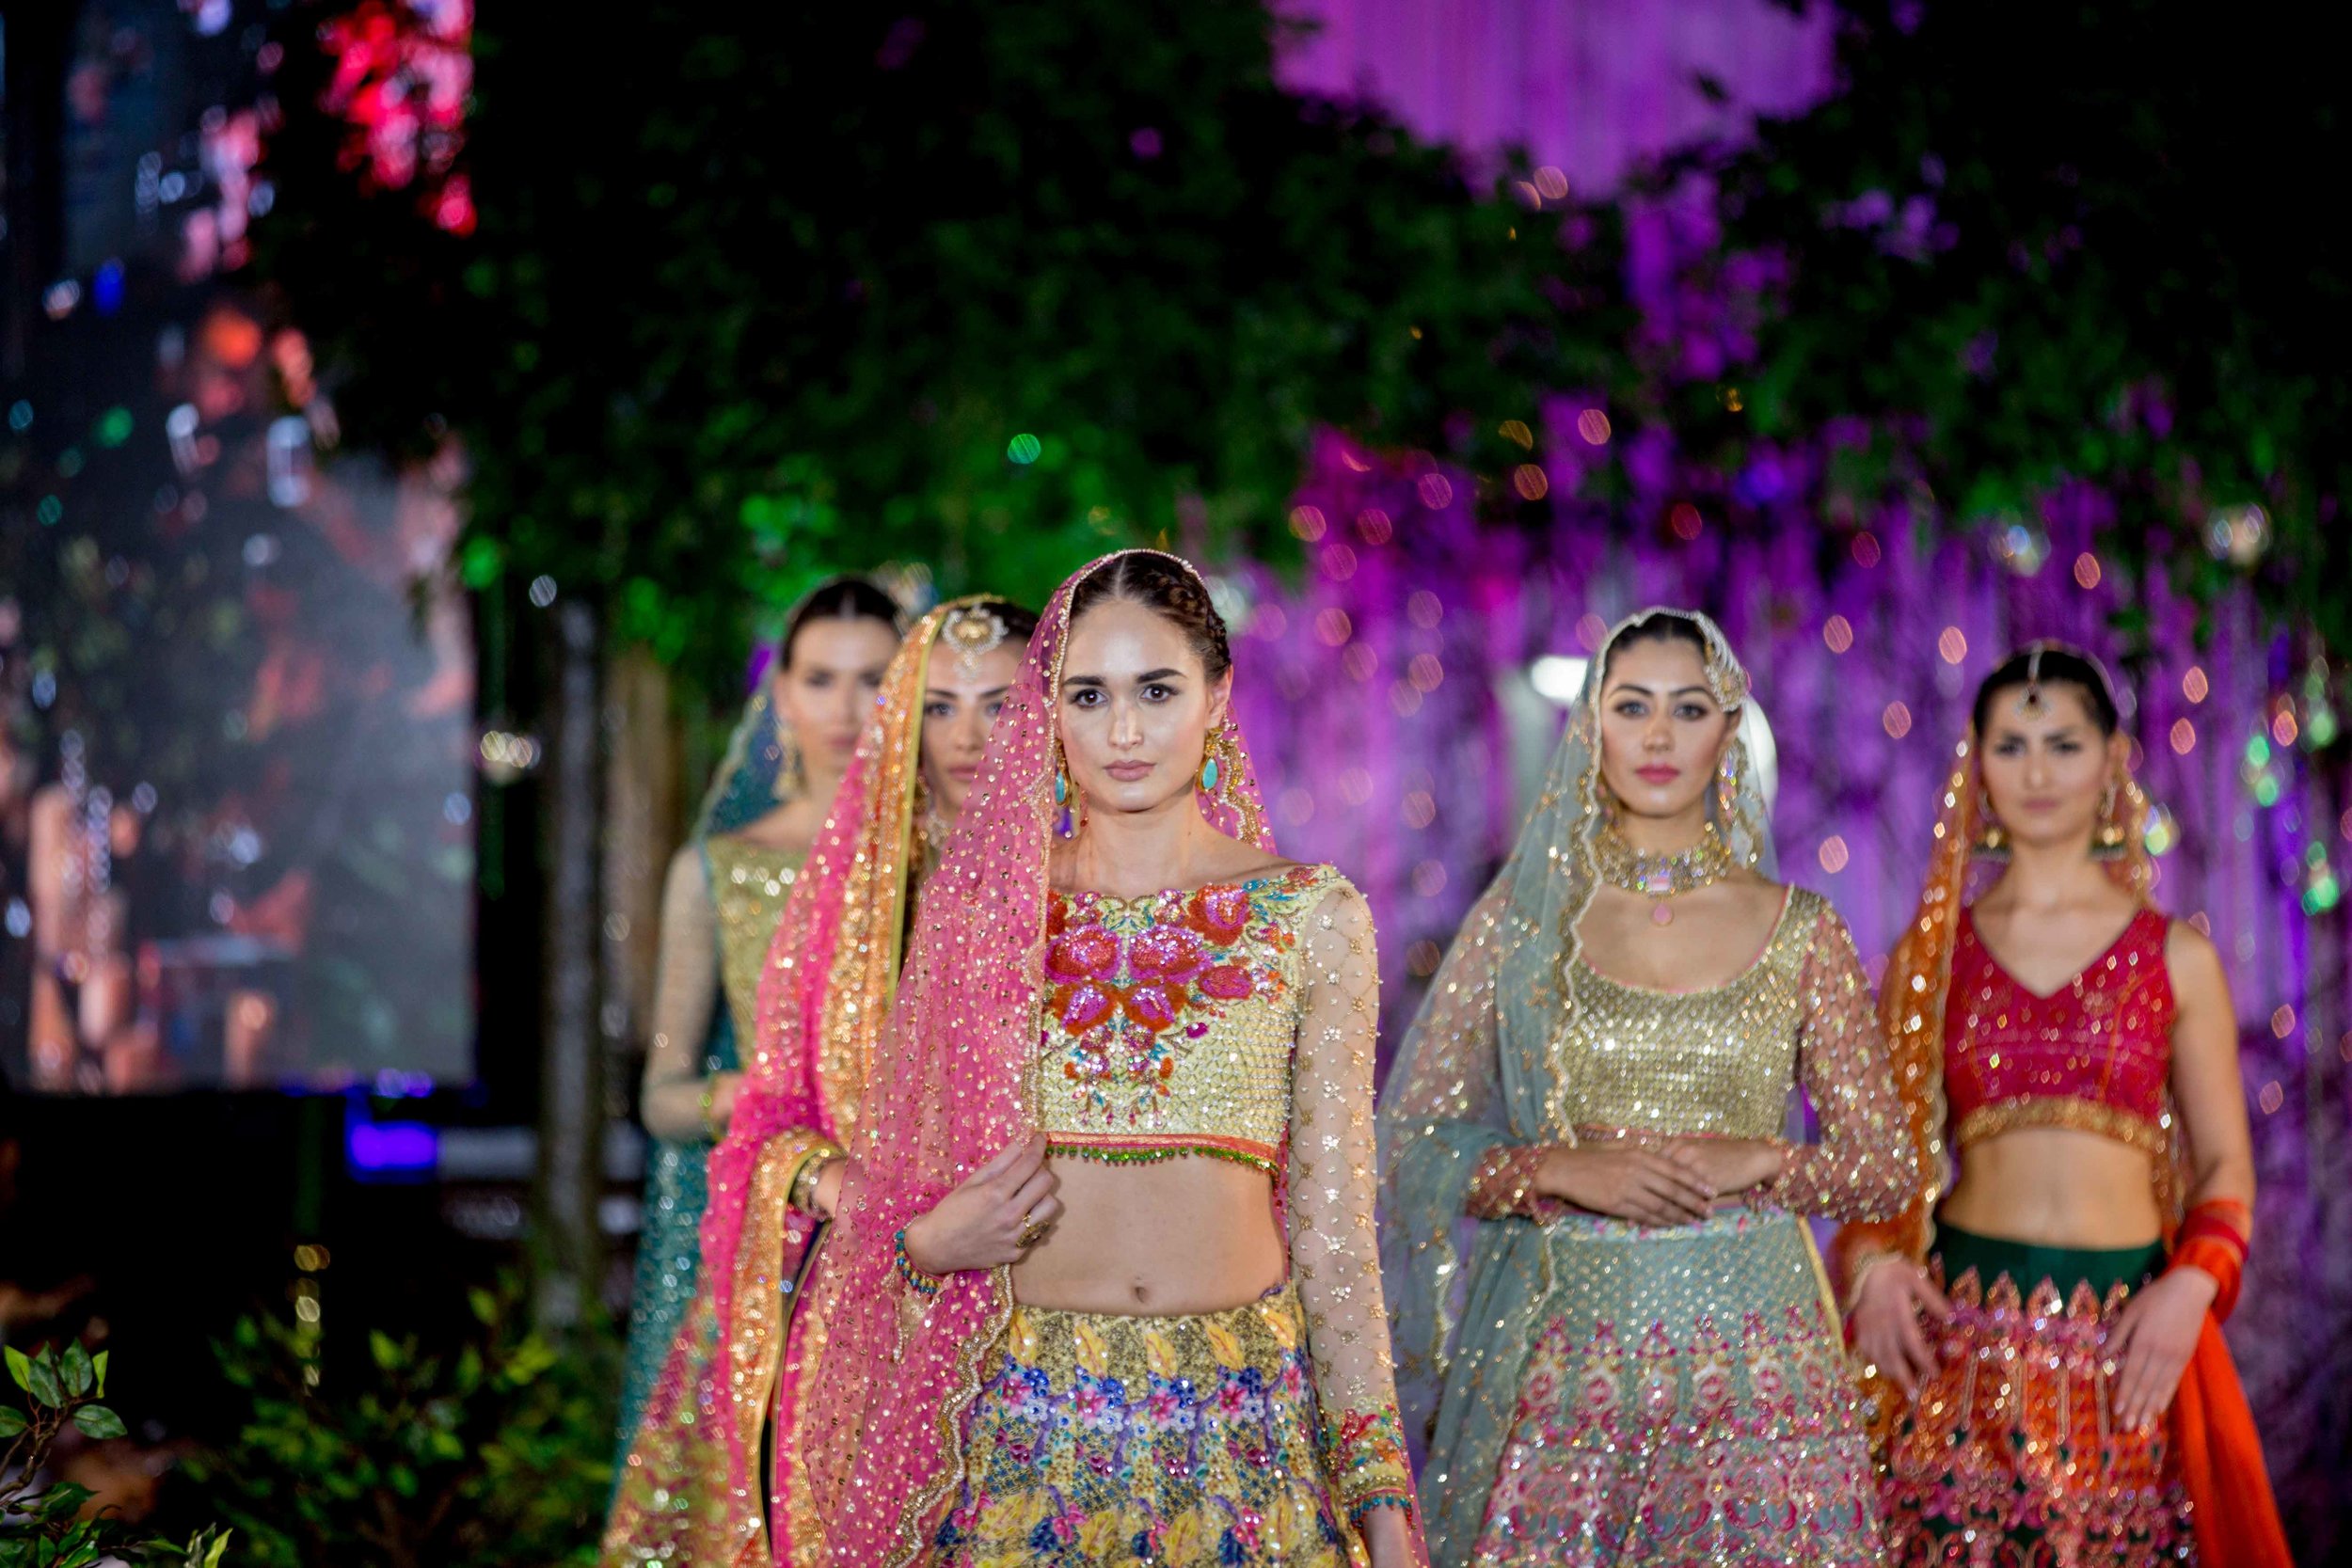 IPLF-IPL-Indian-Pakistani-London-Fashion-London-Week-catwalk-photographer-natalia-smith-photography-Nomi-Ansari-5.jpg